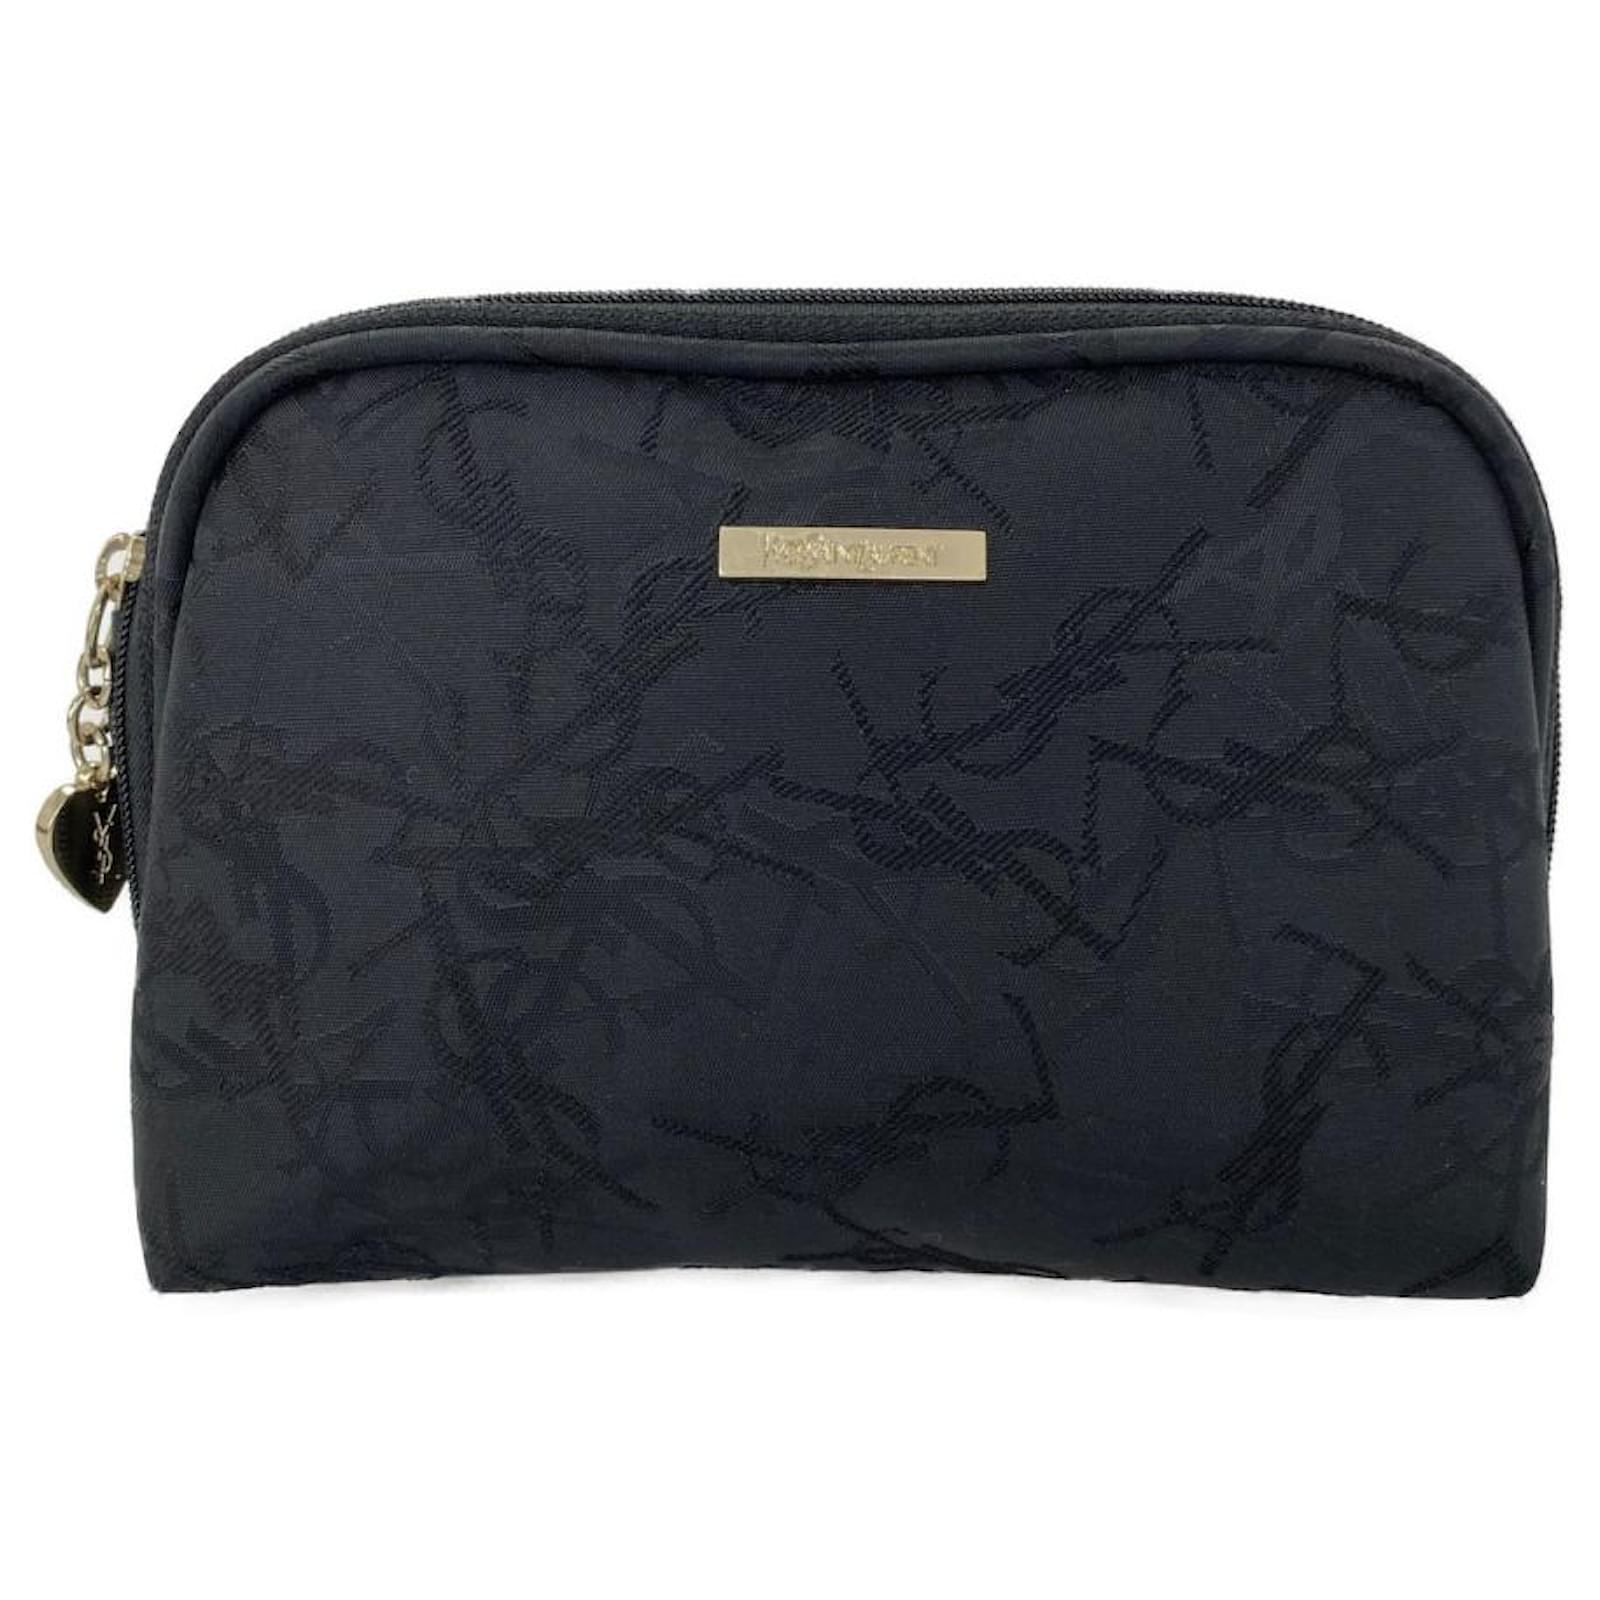 Yves Saint Laurent Handbags for sale in Baton Rouge, Louisiana | Facebook  Marketplace | Facebook